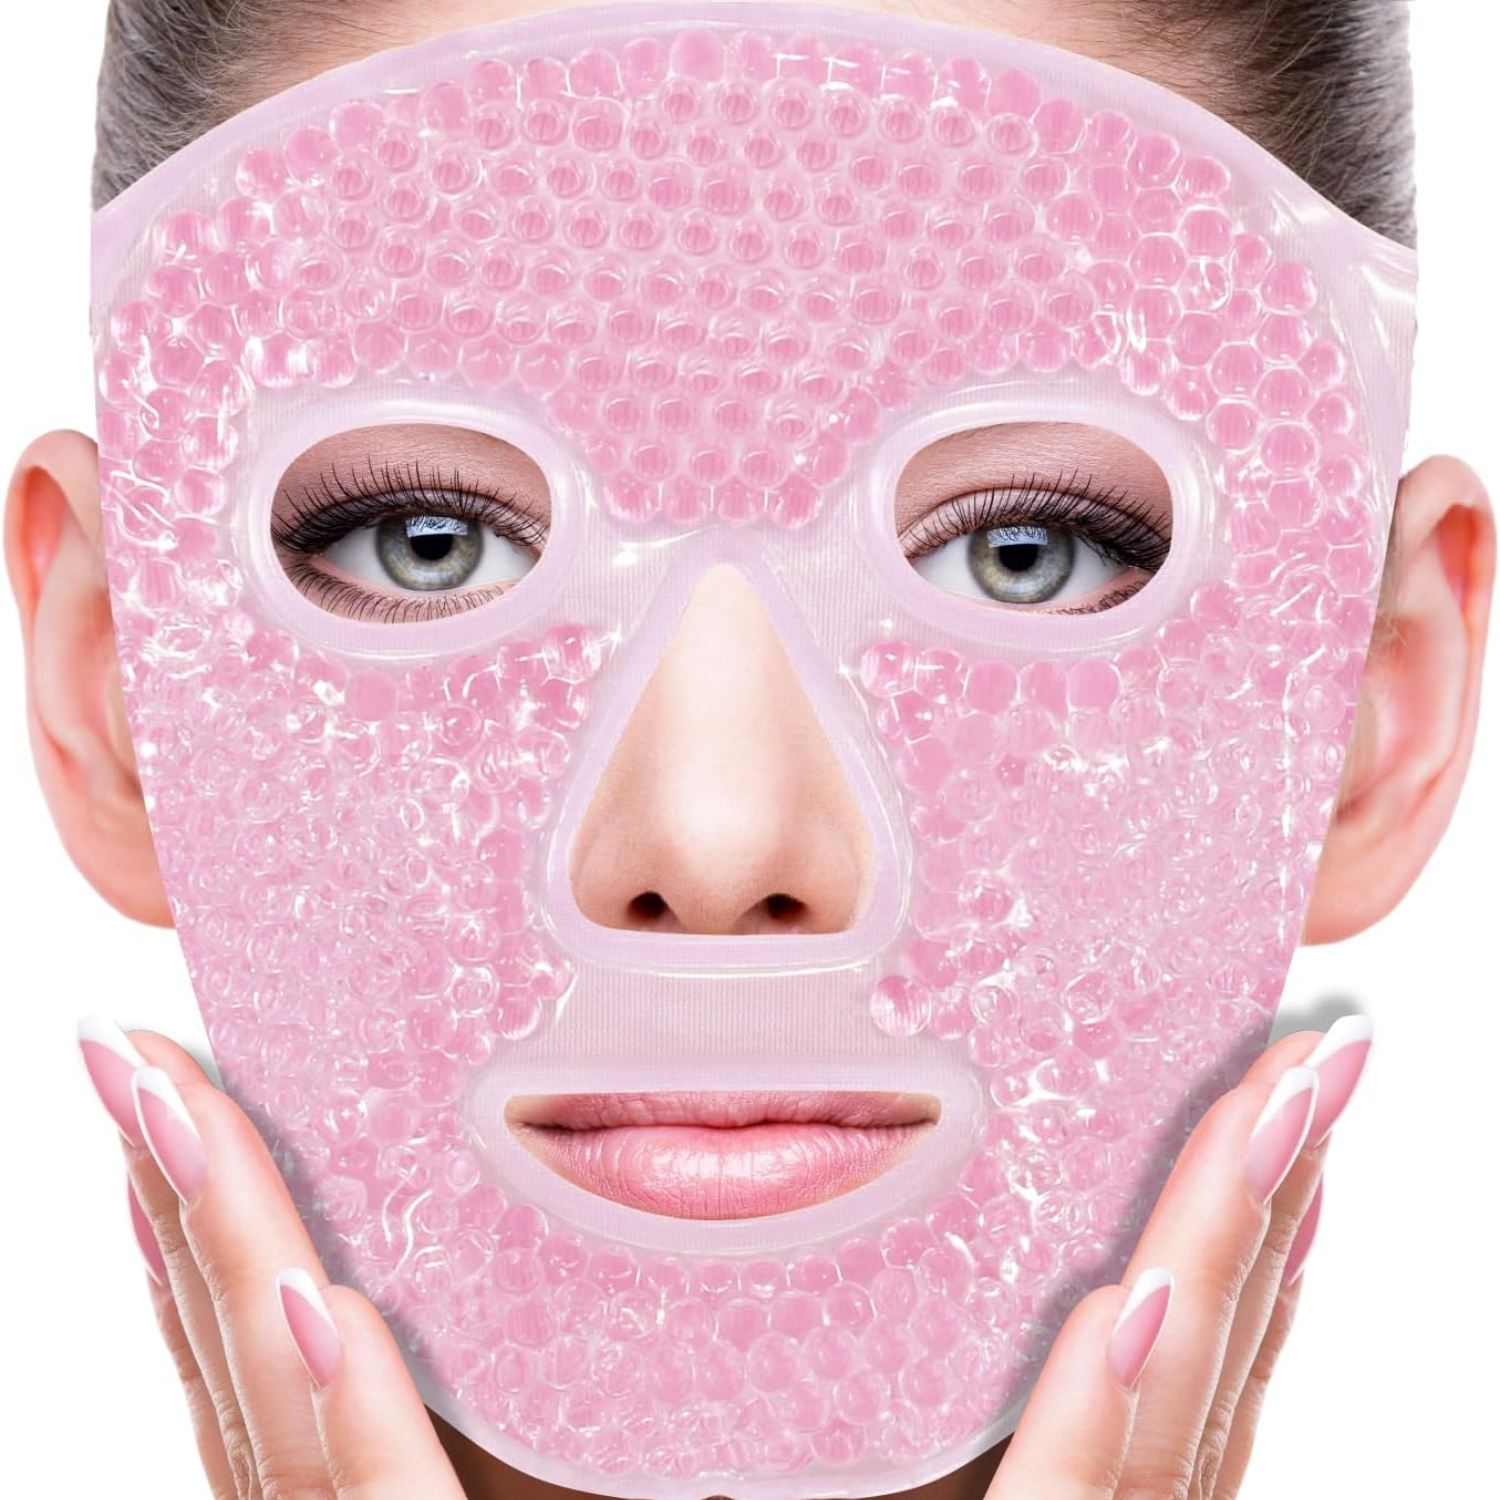 NEWGO Máscara facial fría para ojos, bolsa de hielo reutilizable, terapia  fría y caliente, máscara facial completa para migrañas, dolor de cabeza